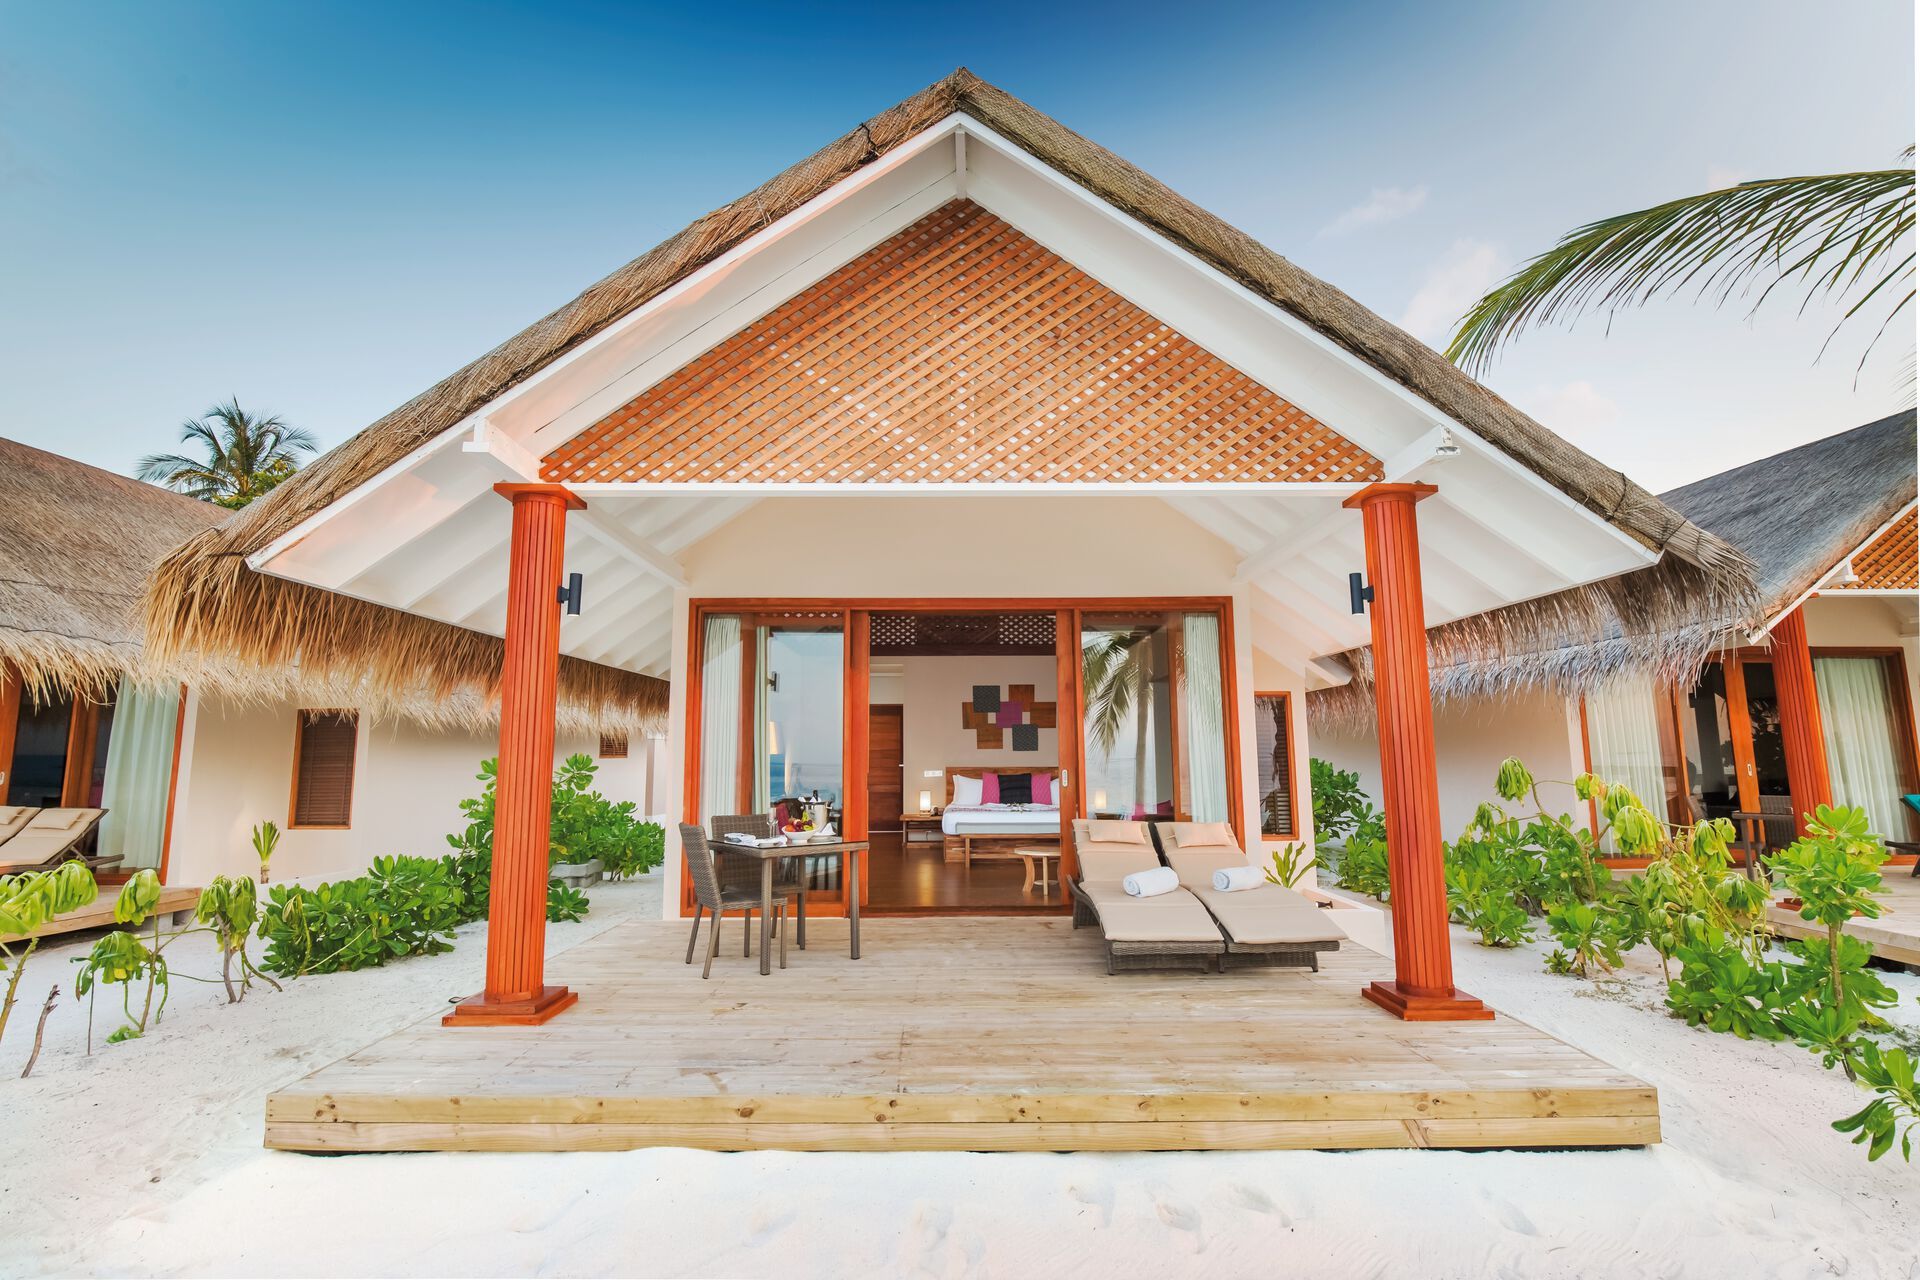 Maldives - Hôtel Kudafushi Resort & Spa 4* - transfert inclus